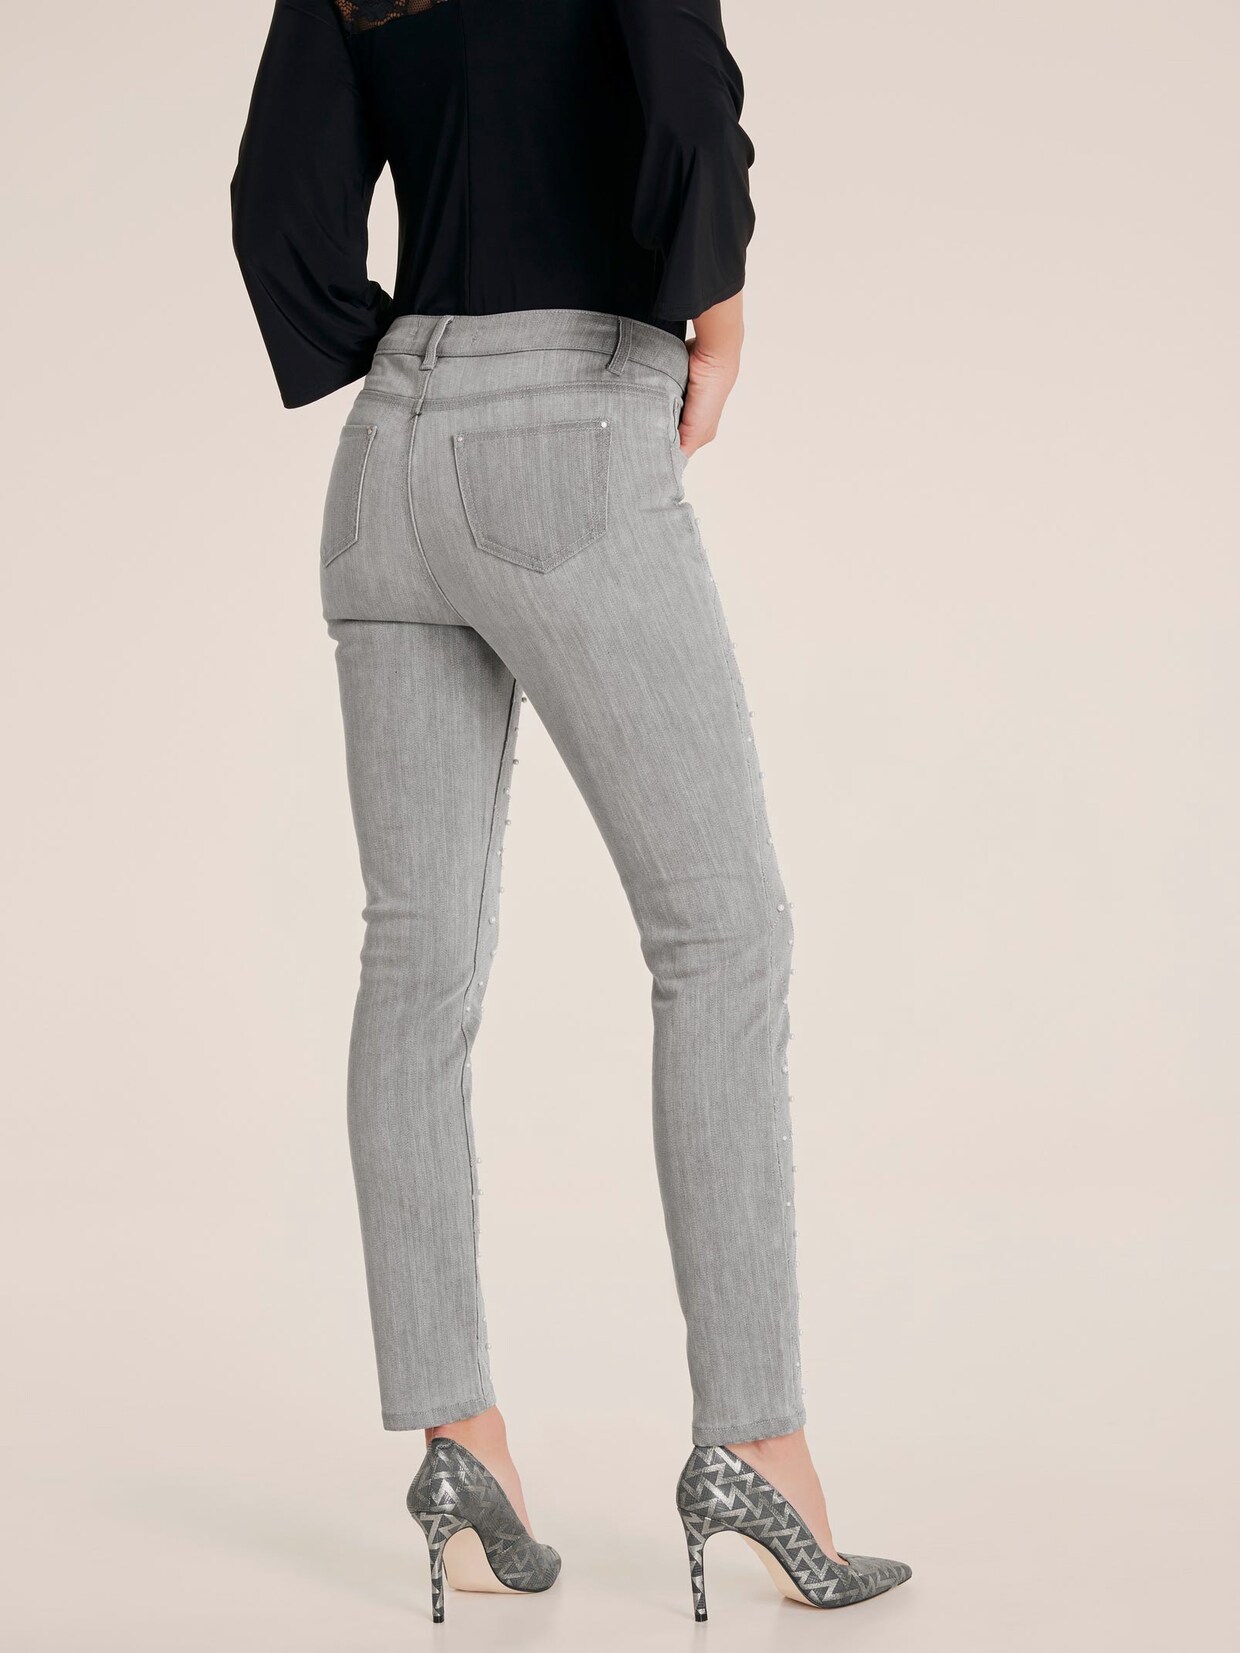 Ashley Brooke 'Buik weg'-jeans - grey denim